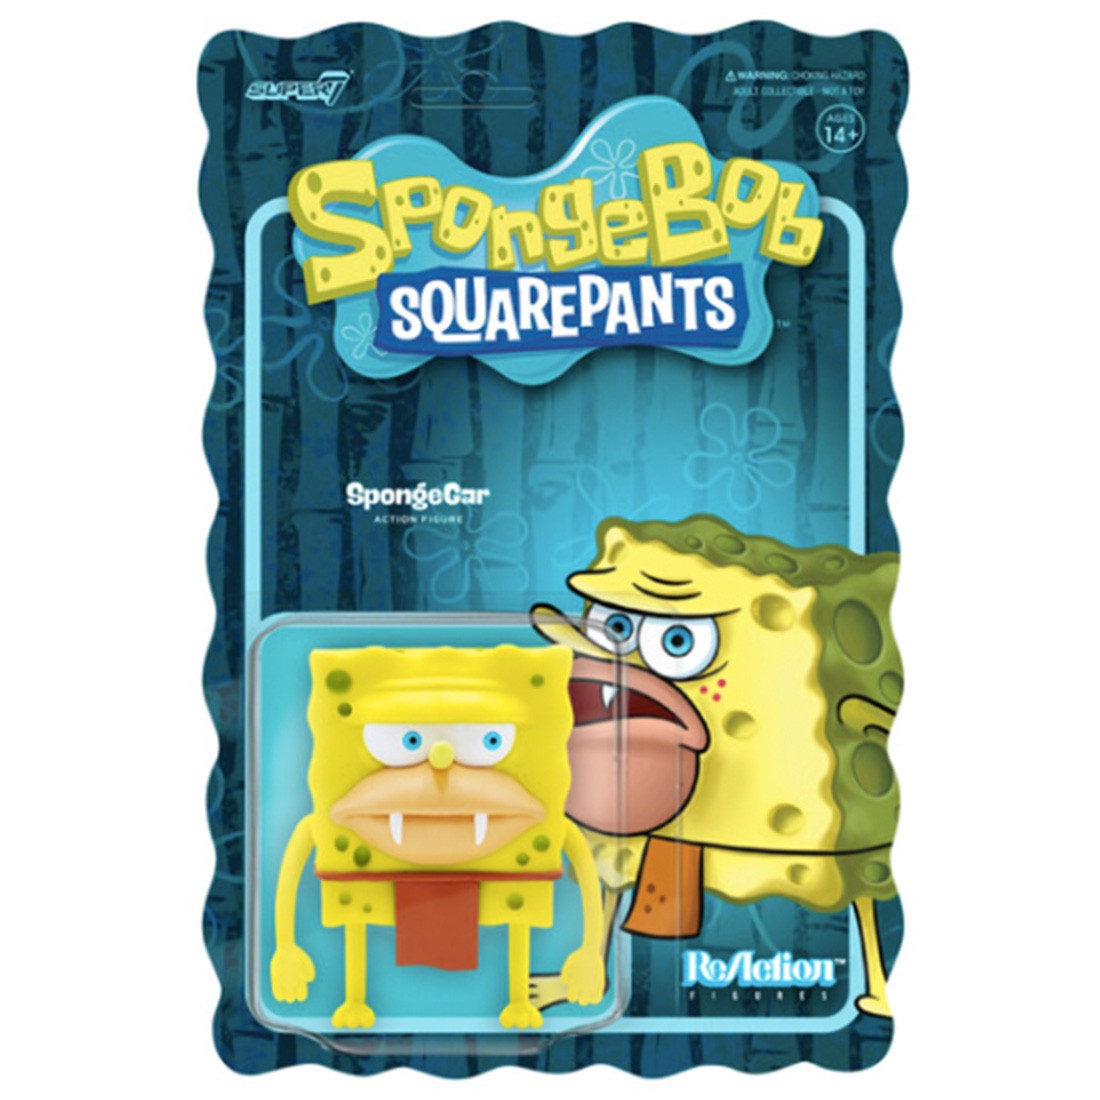 Super7 Spongebob Squarepants Spongegar Reaction Figure (yellow)